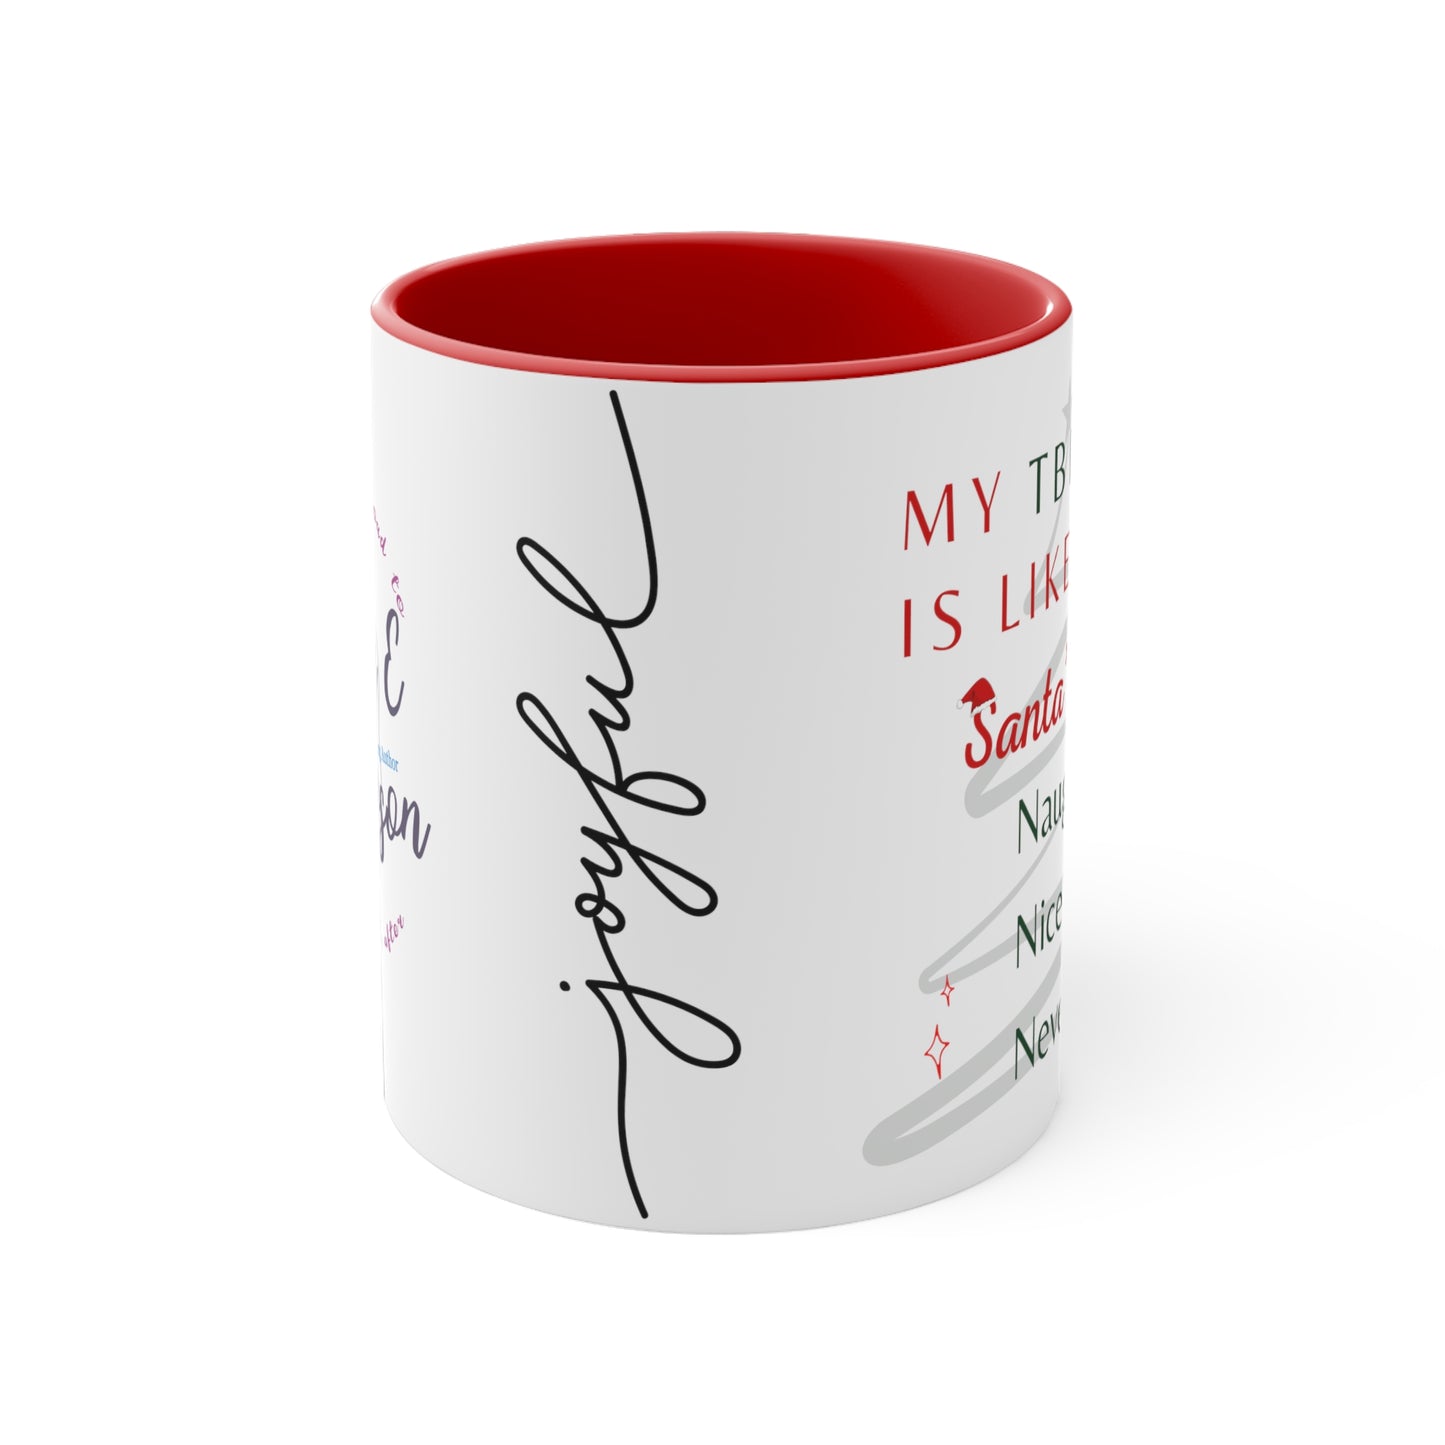 TBR Pile Mug: Accent Coffee Mug, 11oz